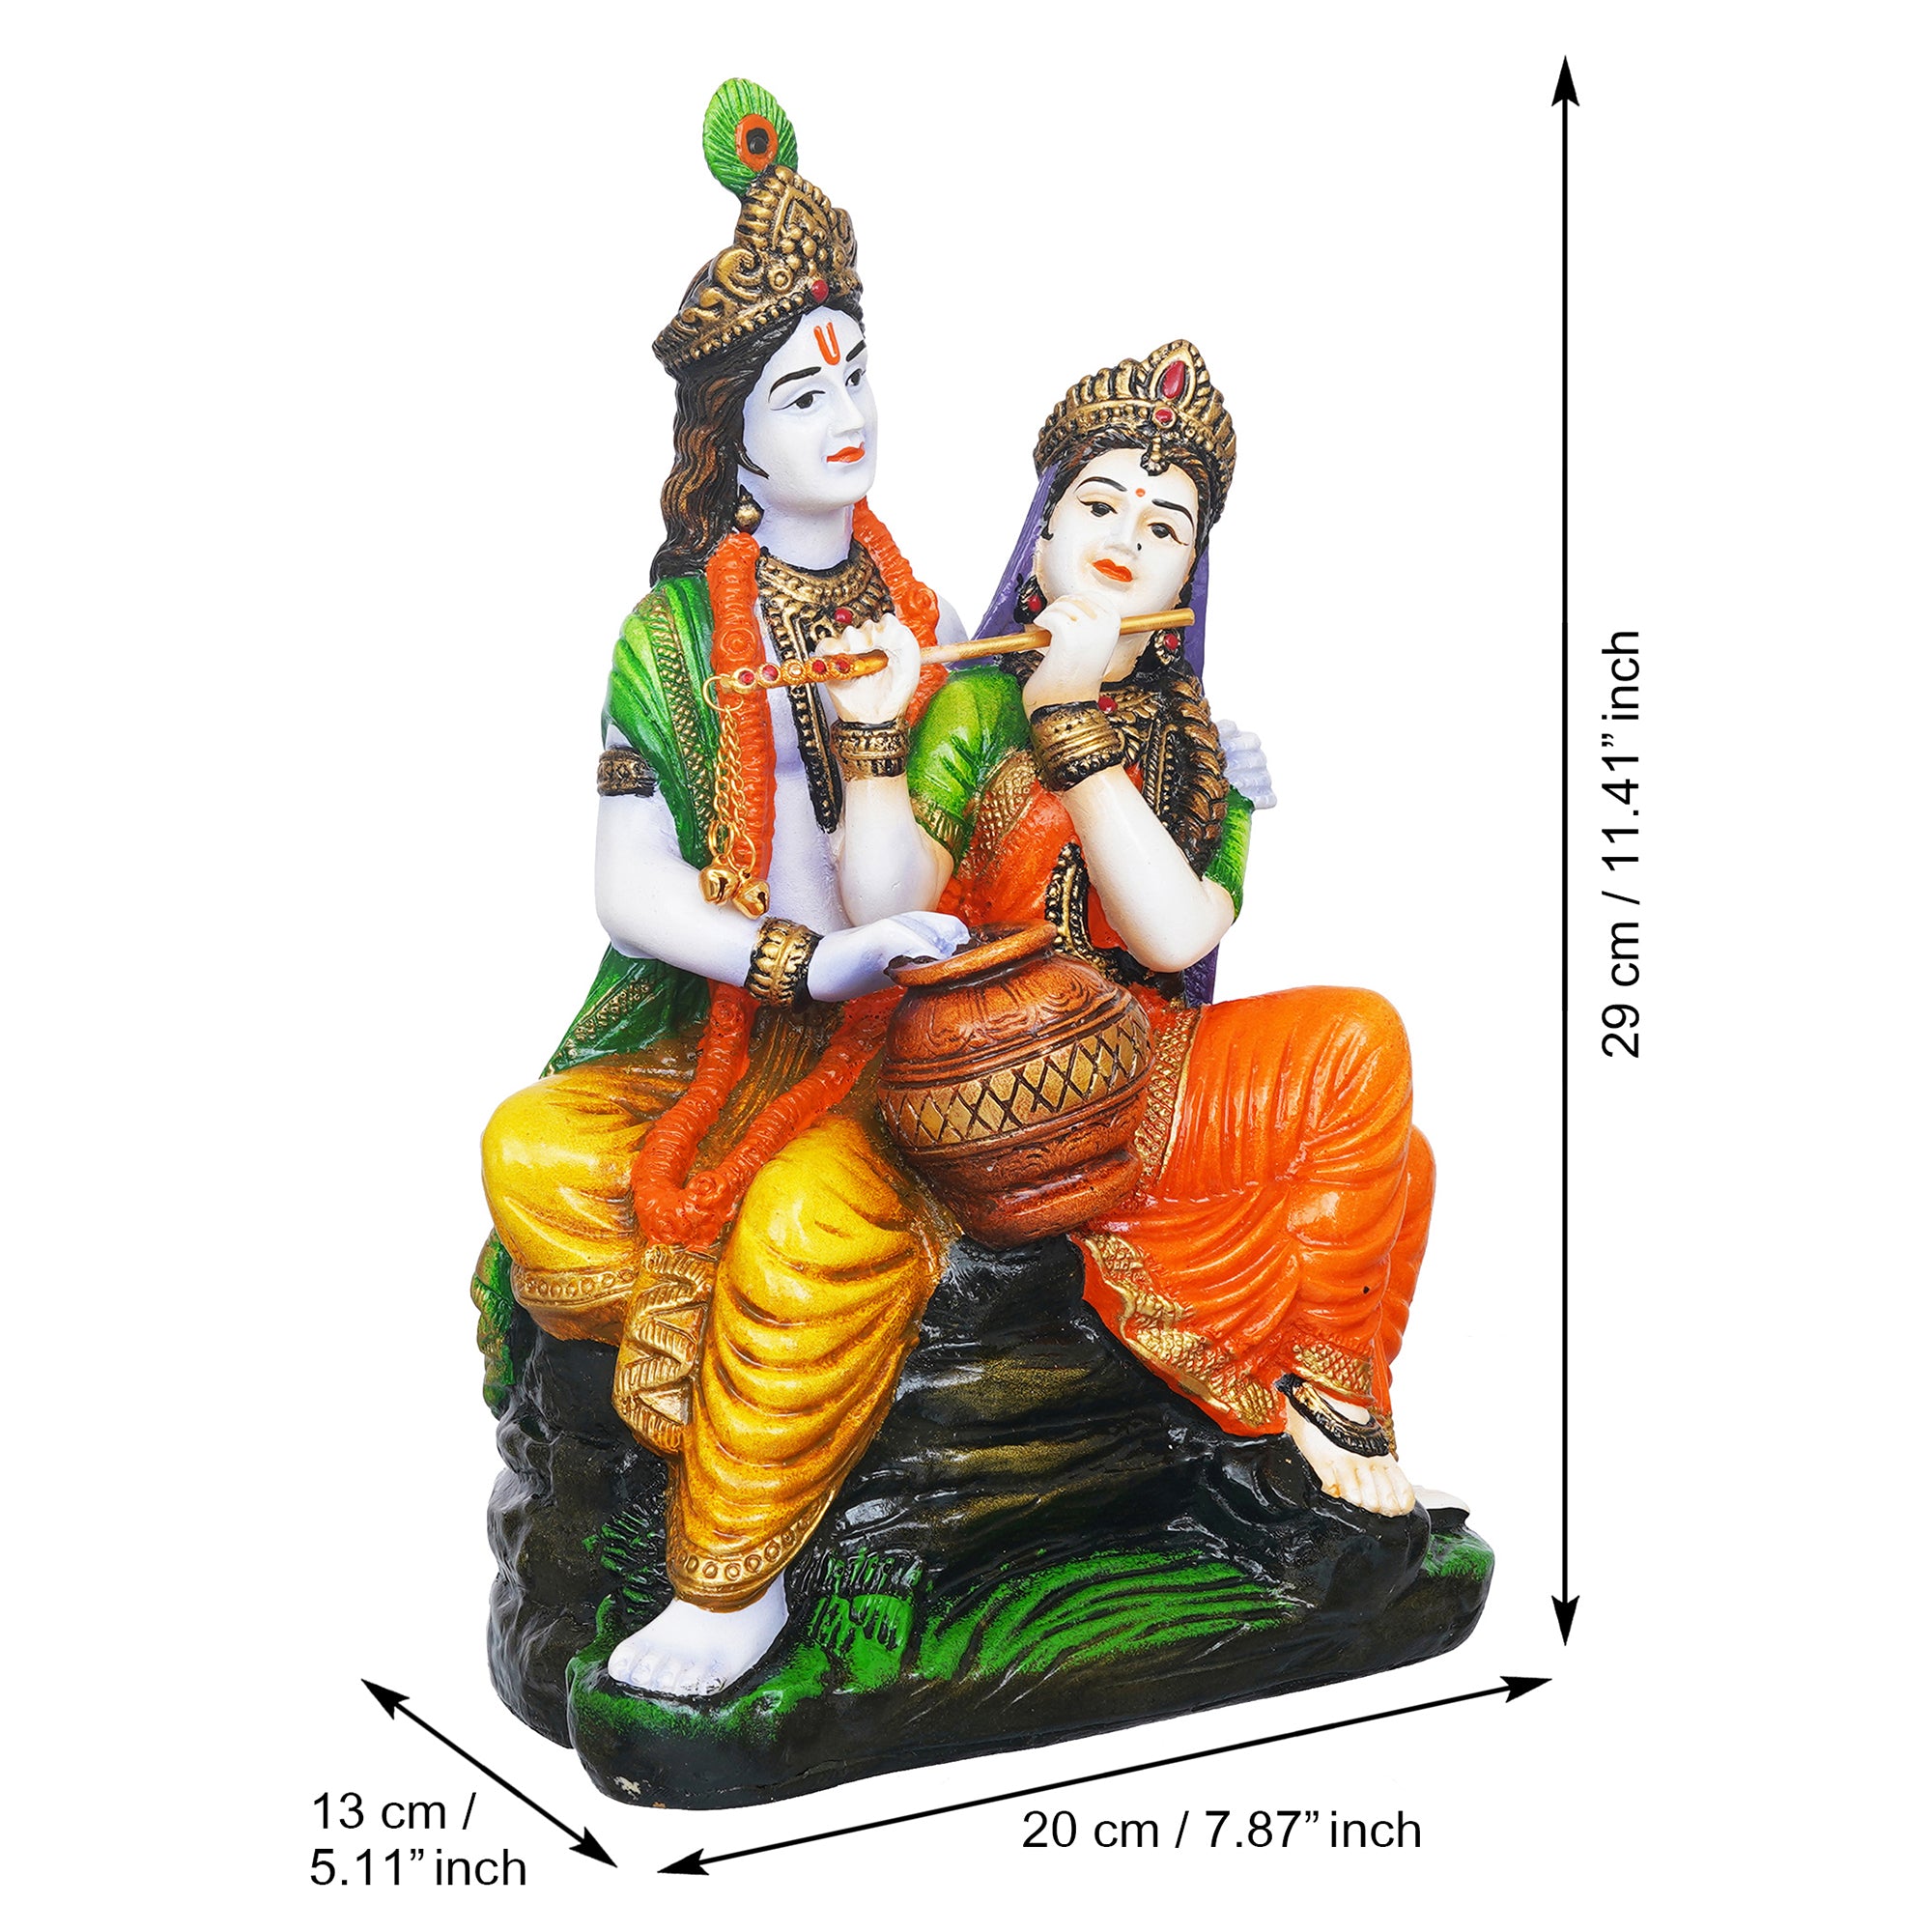 eCraftIndia Multicolor Polyresin Radha Krishna Idol Sitting on Rock Playing Flute and Holding Matki 3